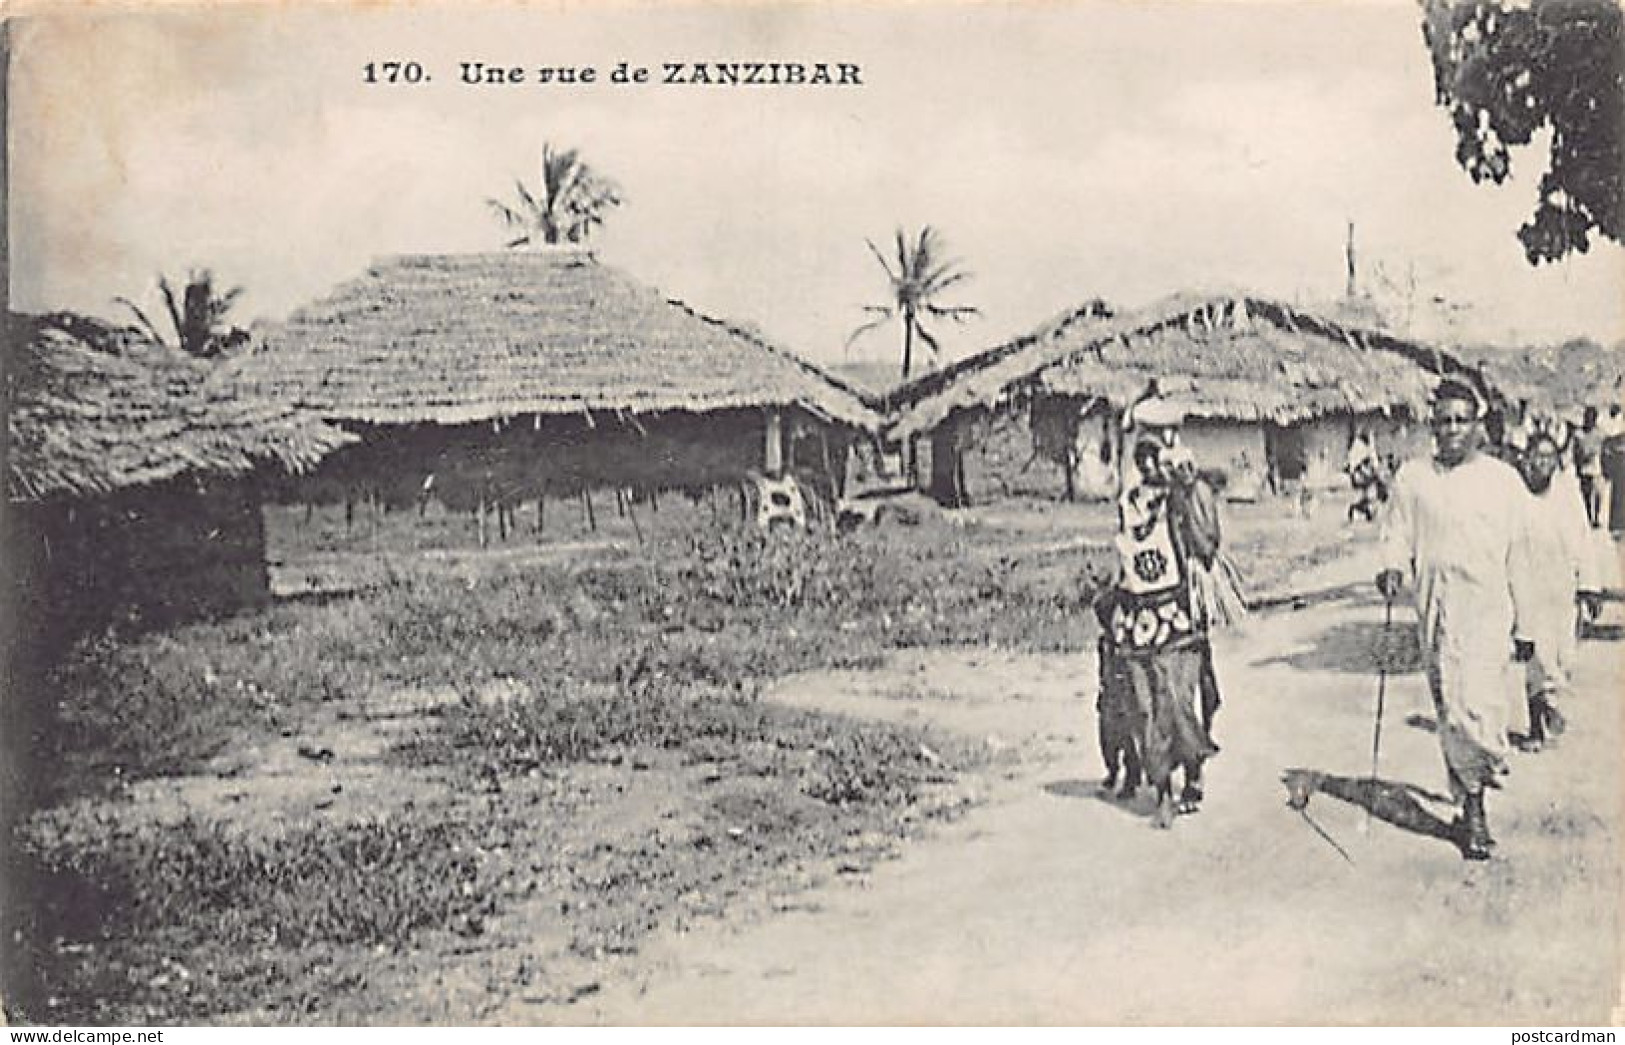 Tanzania - ZANZIBAR - A Street - Publ. Messageries Maritimes 170 - Tanzanía